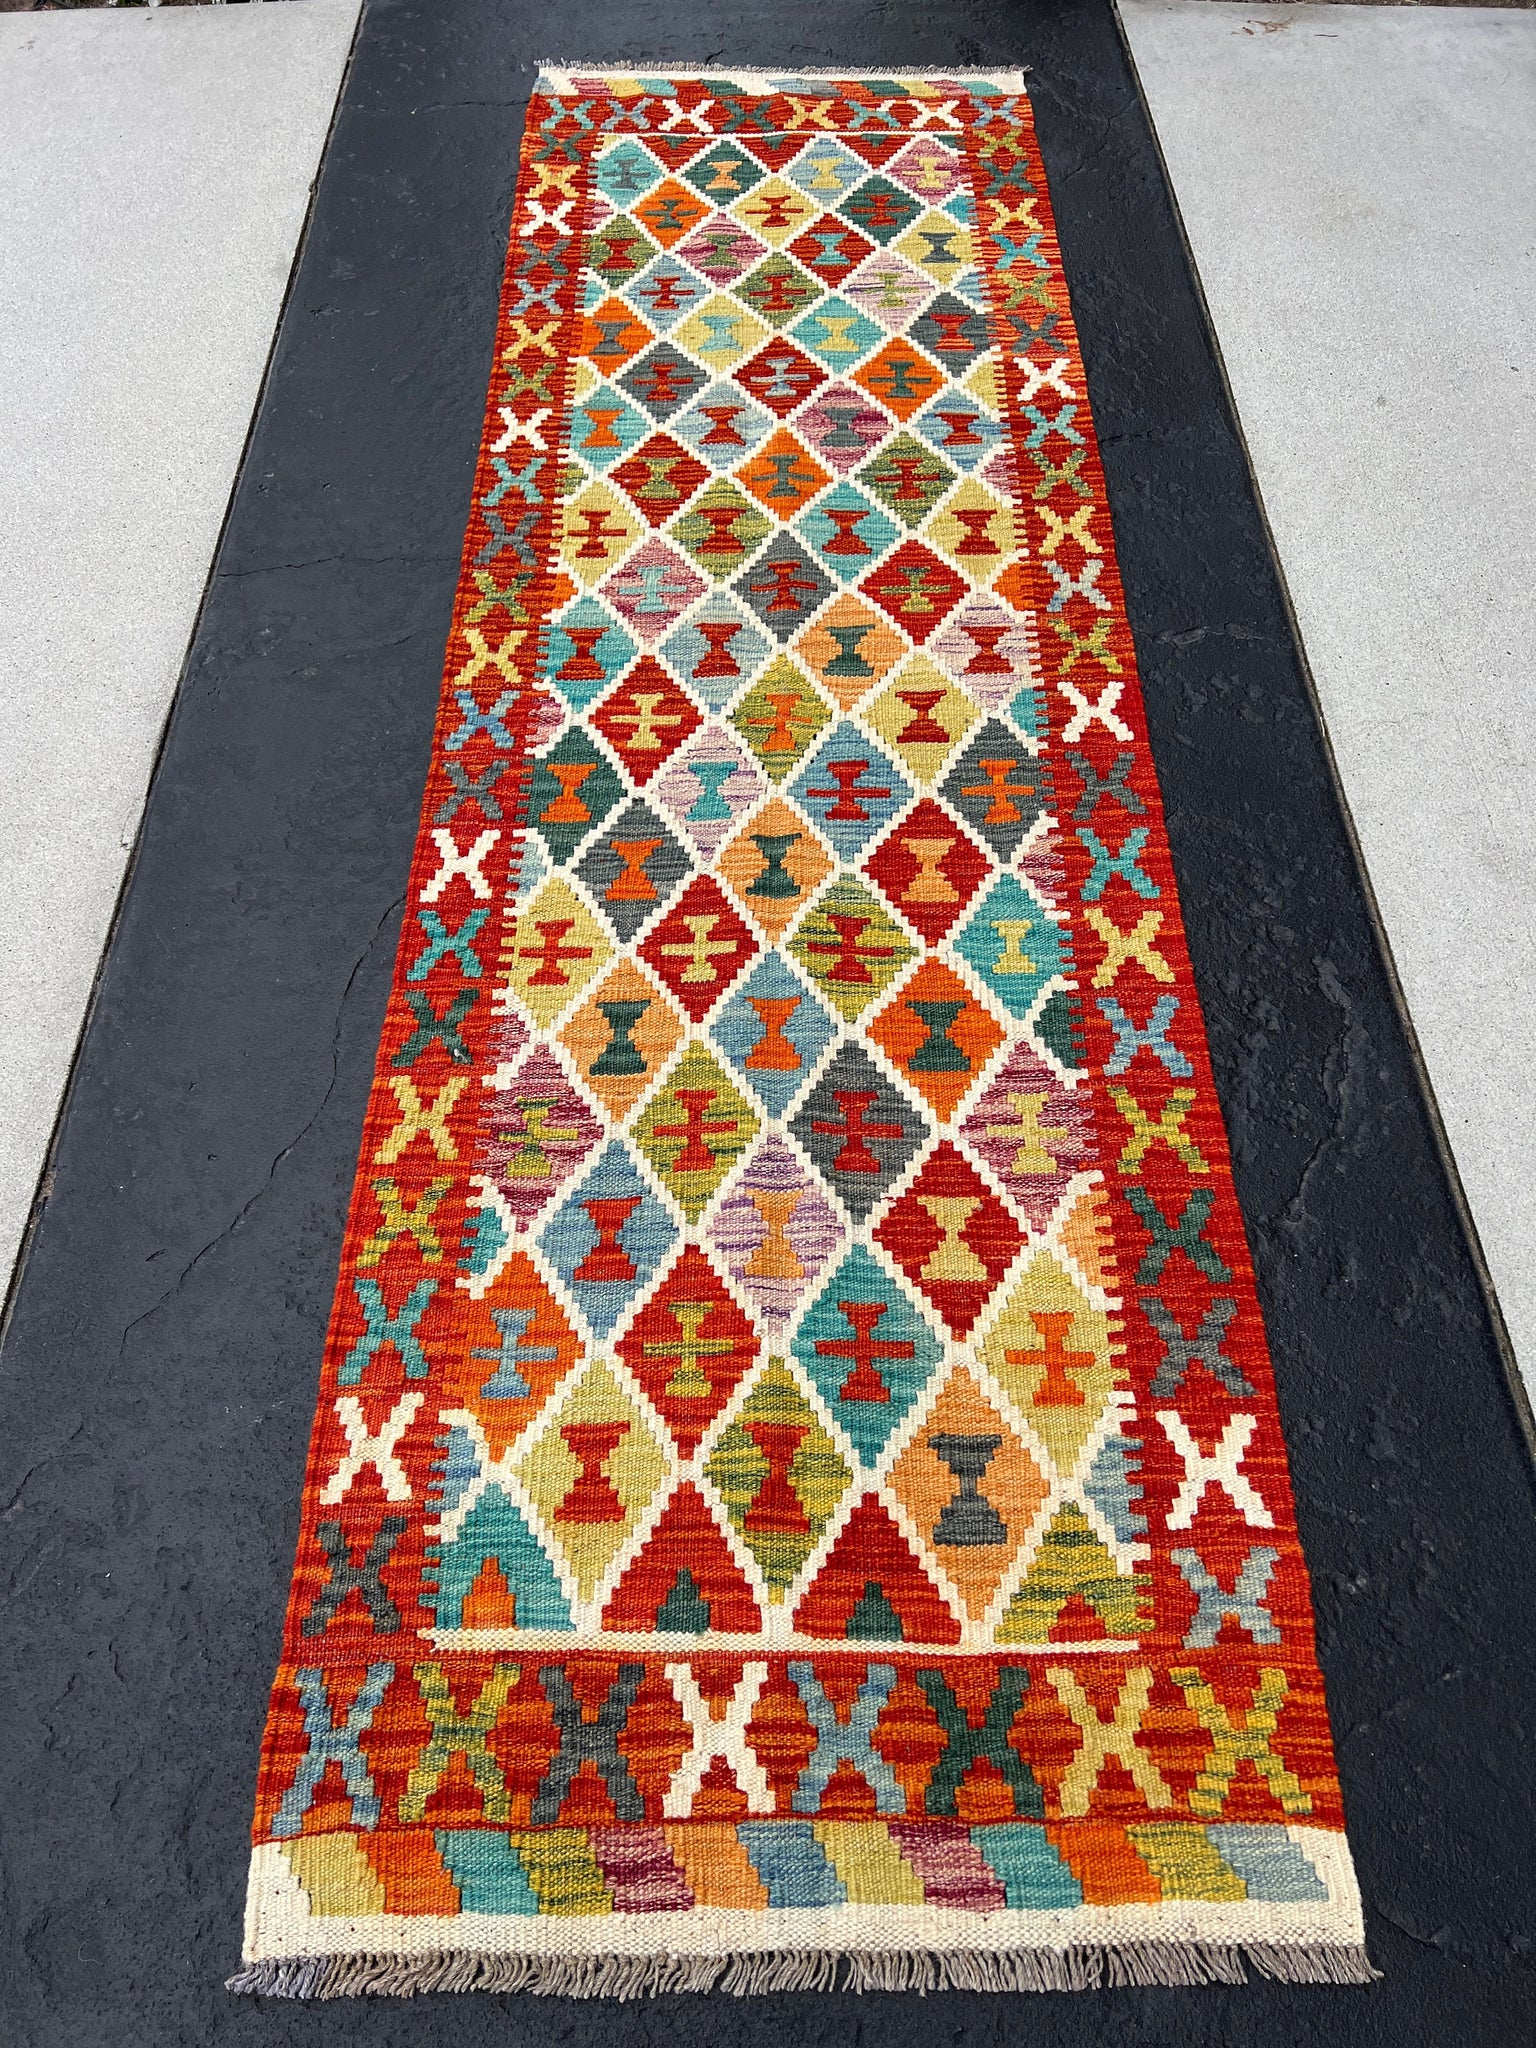 3x8 (90x245) Handmade Afghan Kilim Runner Rug | Burnt Red Orange Mustard Baby Blue Teal Ivory Green Mauve | Flatweave Woven Outdoor